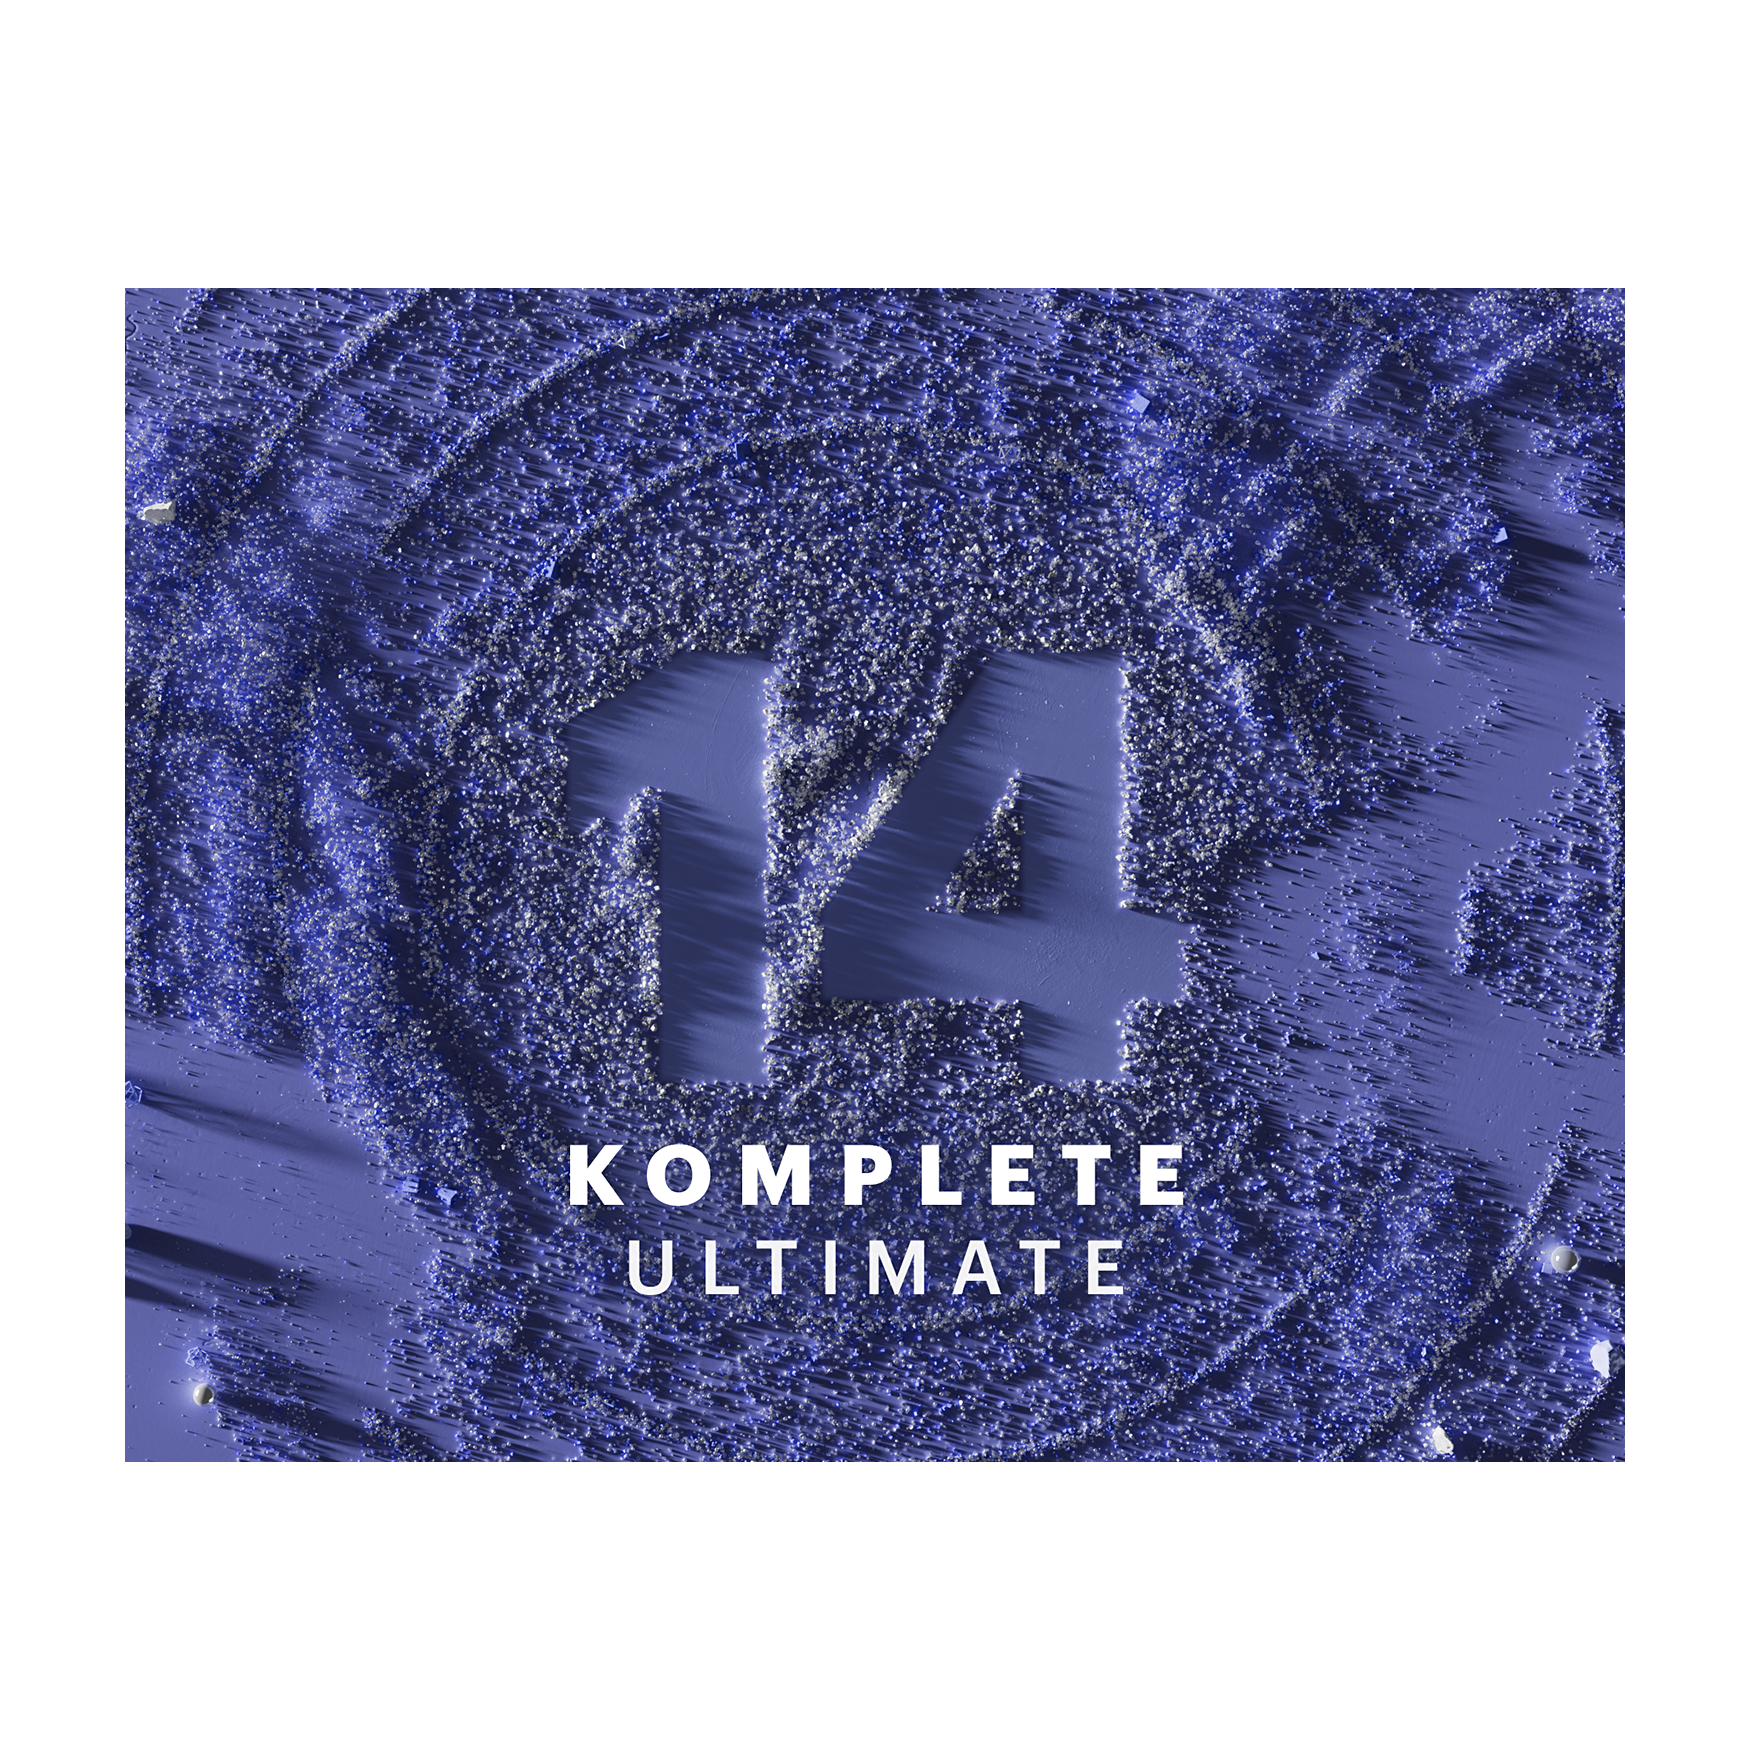 Komplete-14-Ultimate-artwork-logo